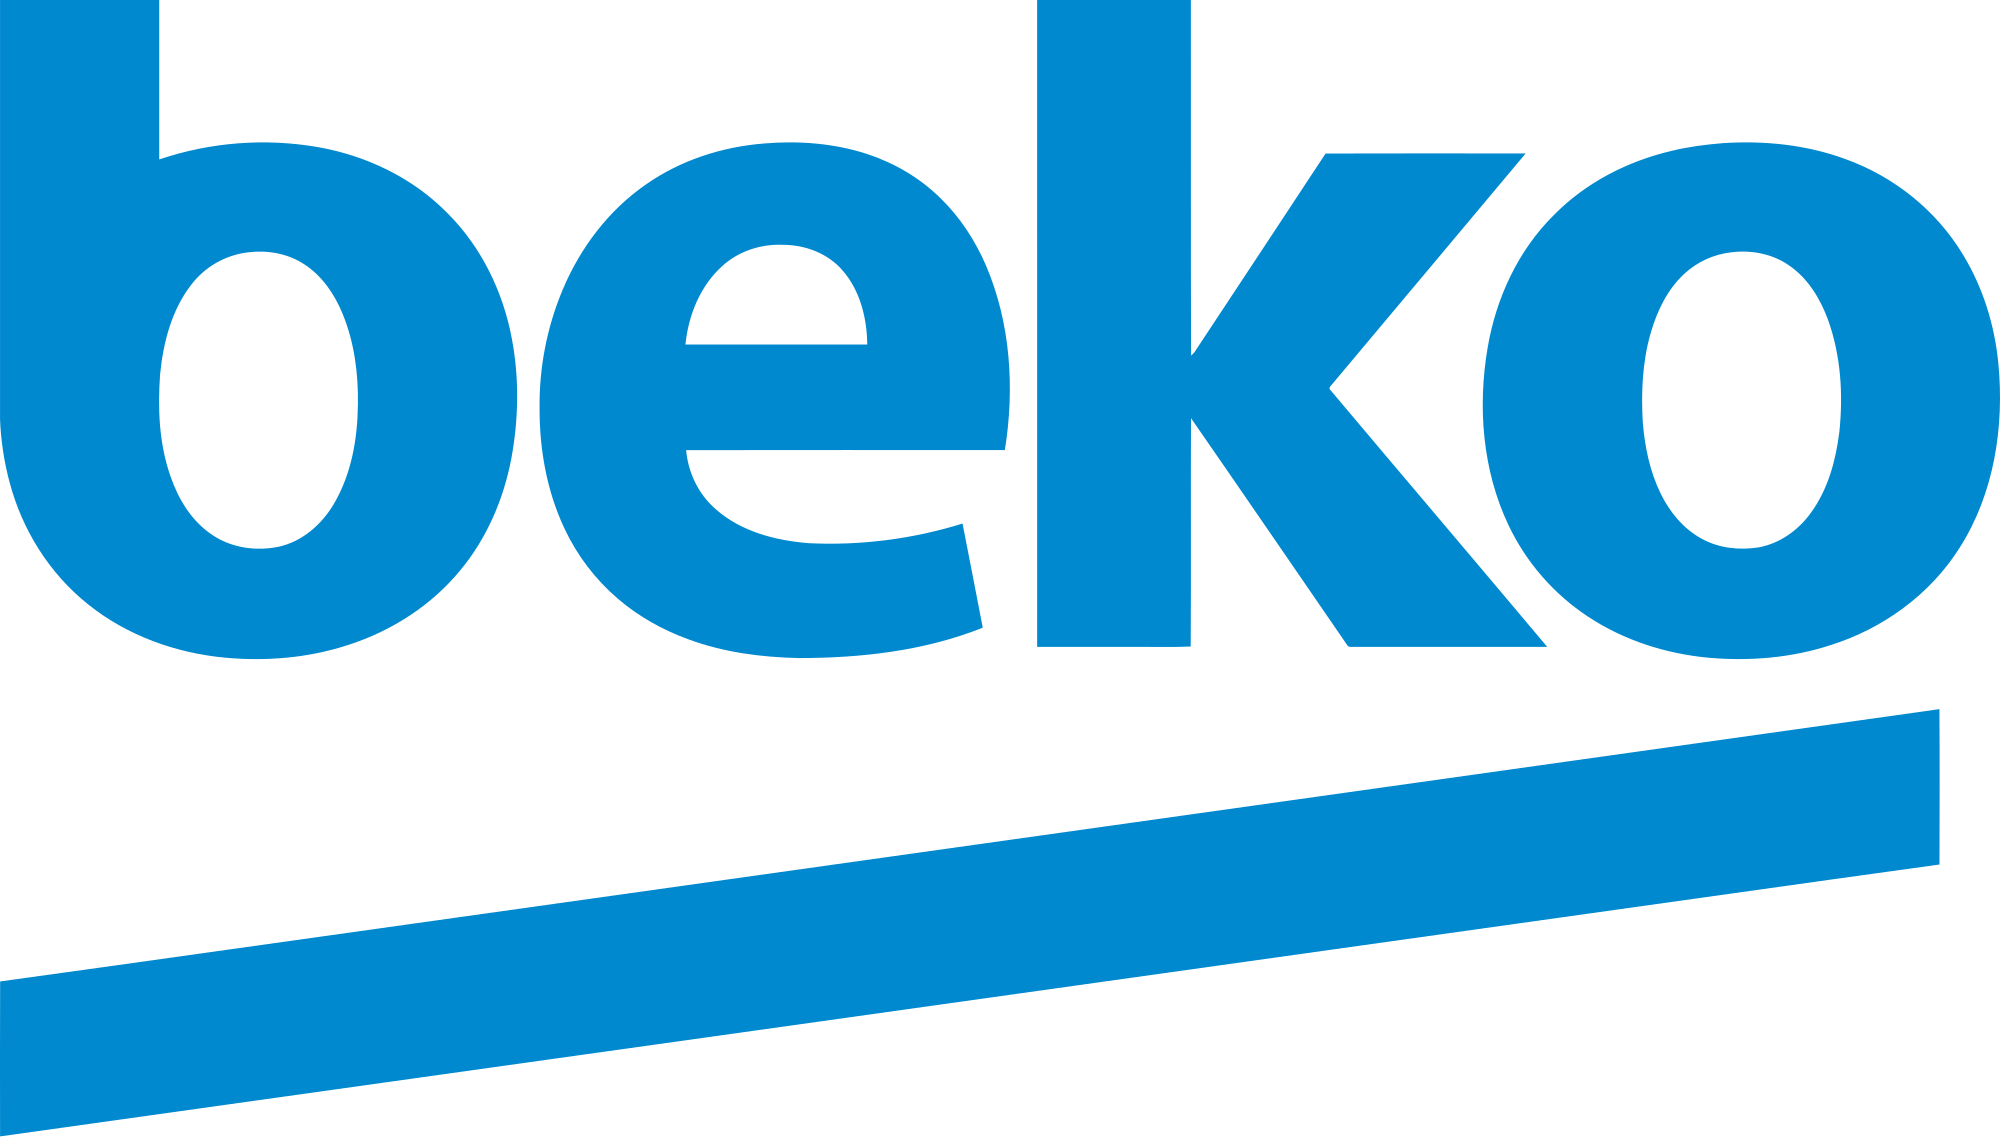 Beko Technologies